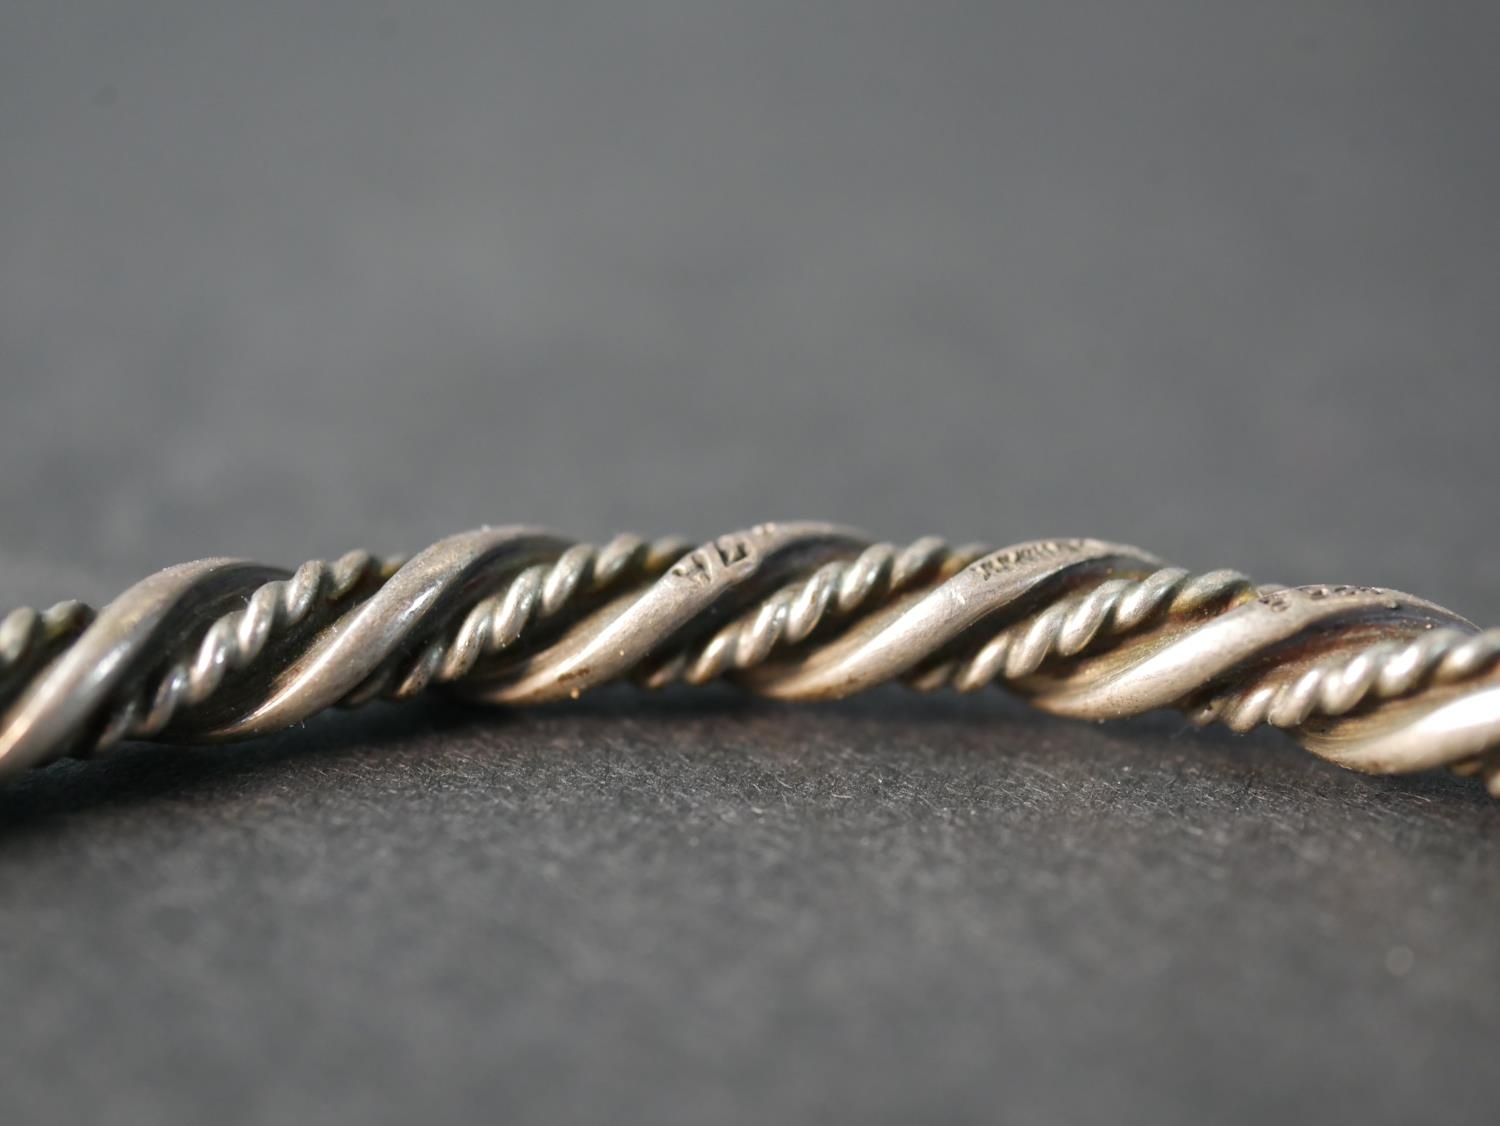 A Georg Jensen silver rope twist bangle, design no. 17B, George Jensen oval mark. - Image 3 of 7